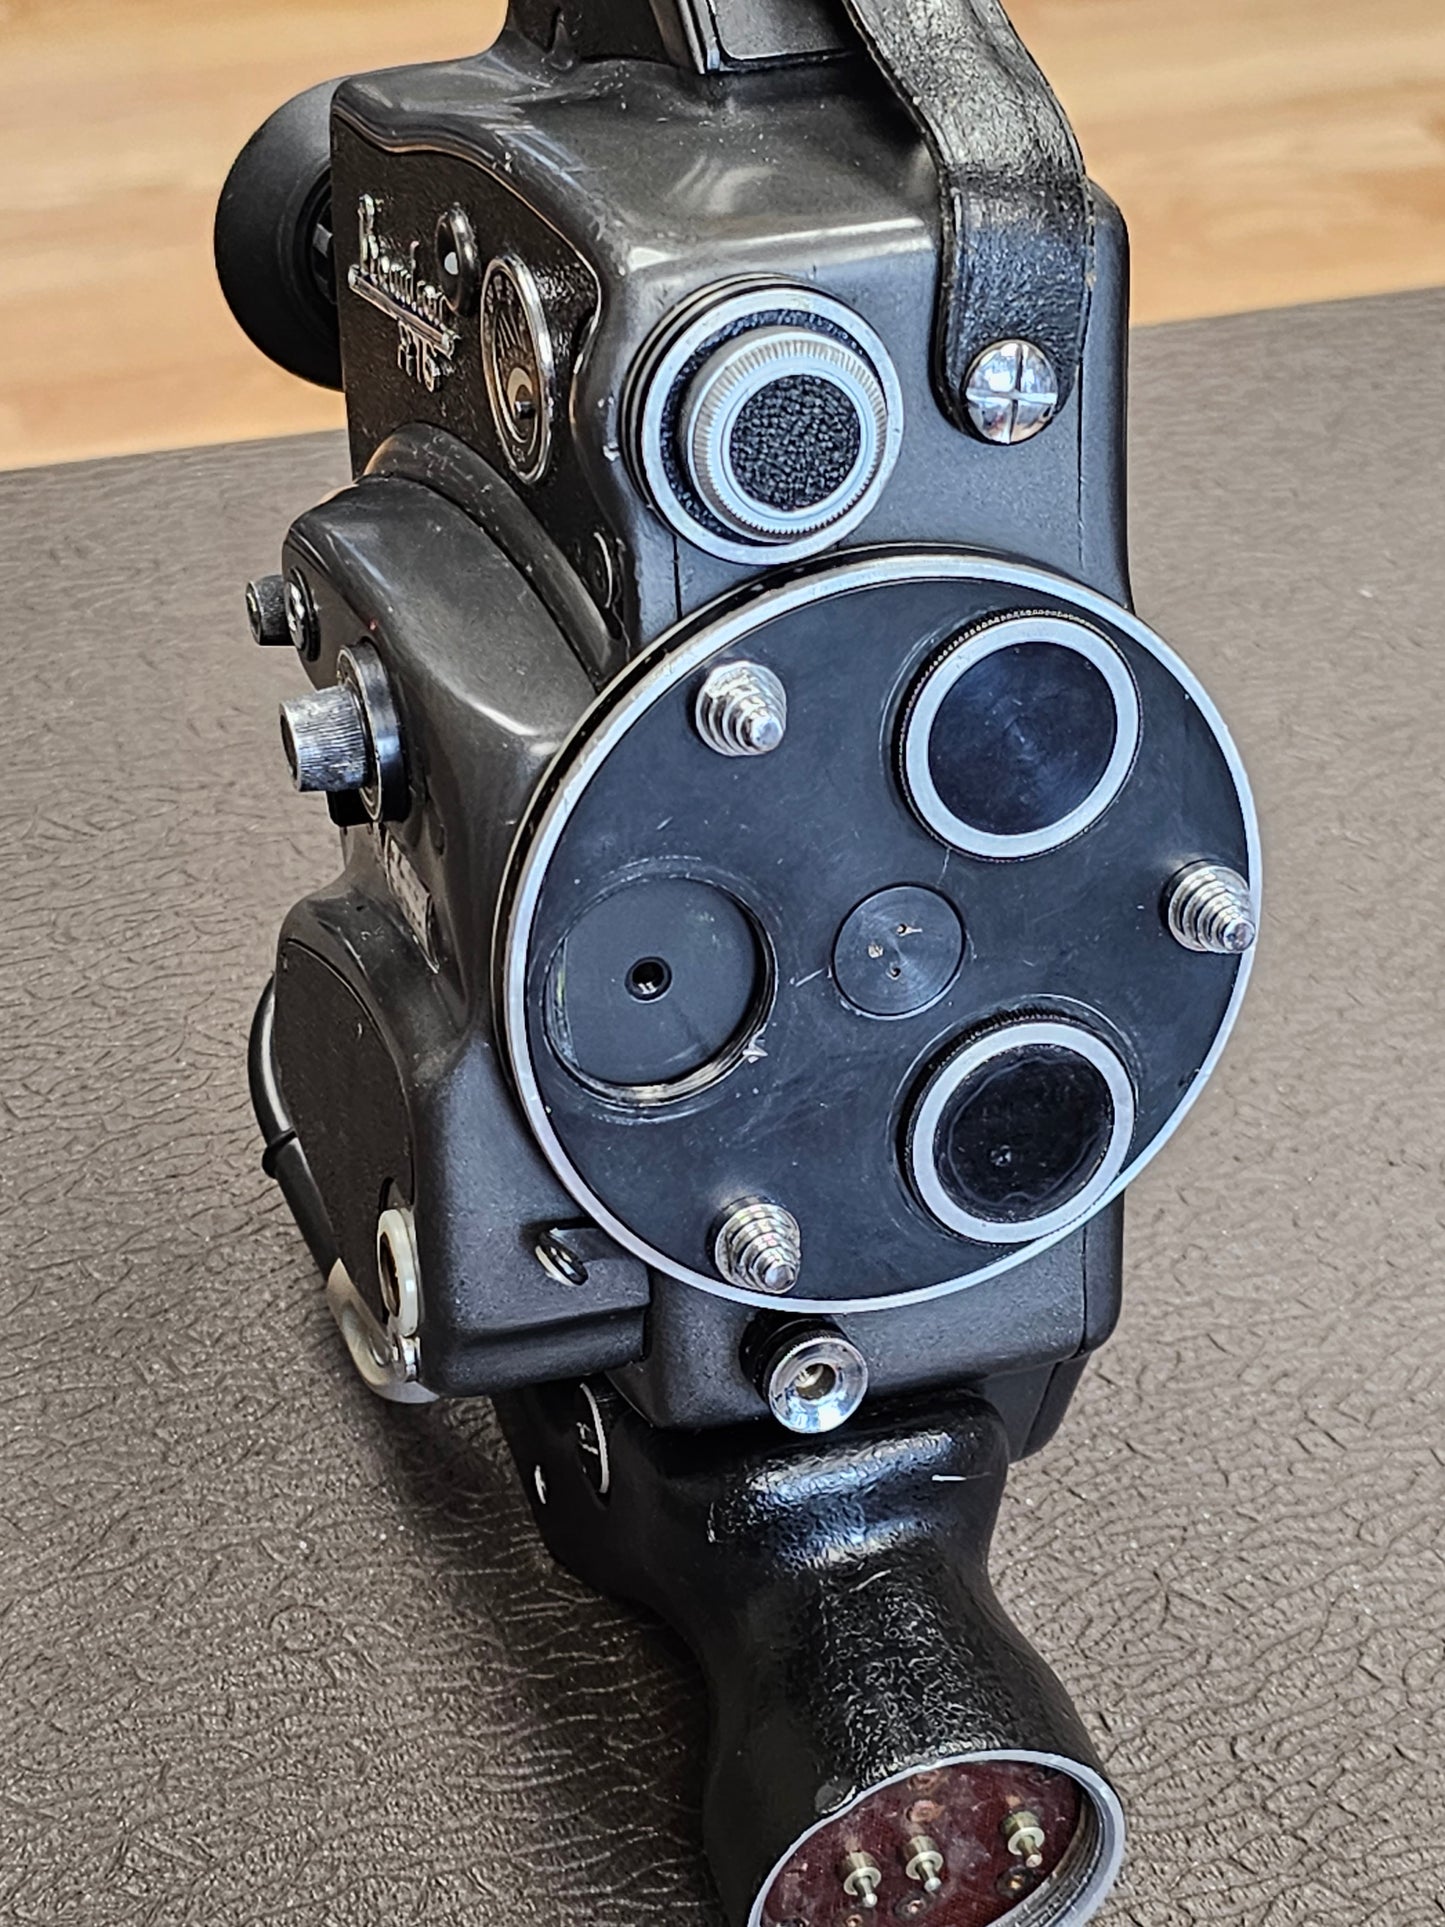 Beaulieu R-16 Camera body with powergrip S# 80922